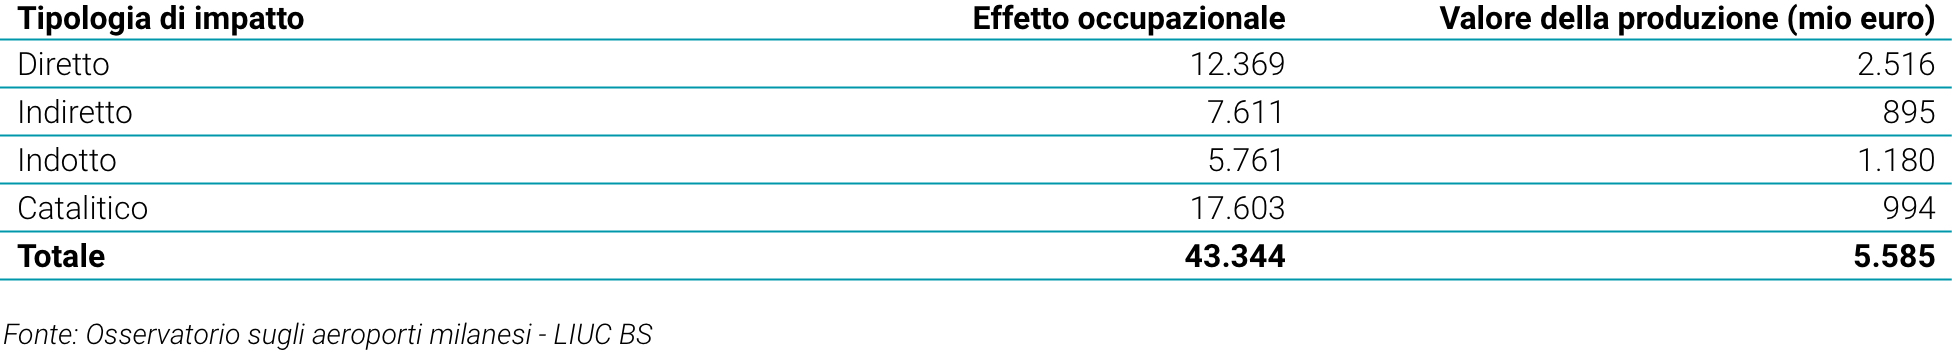 socio economic footprint Linate